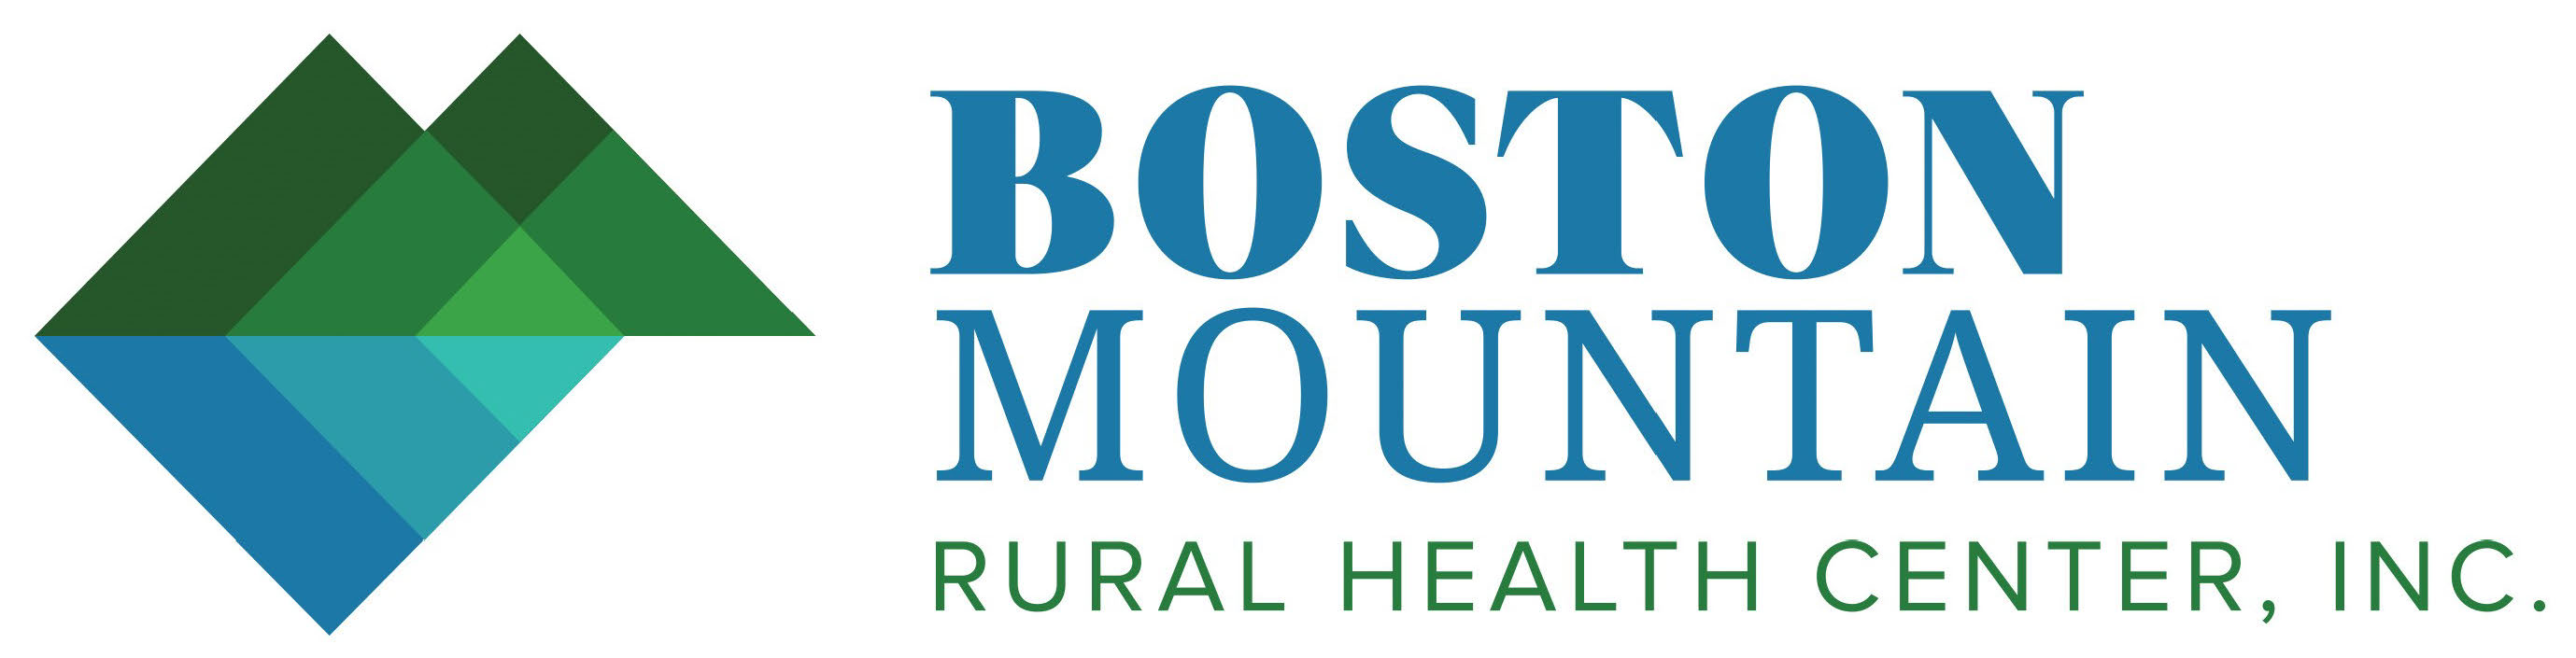 Boston Mountain Rural Health Center, Inc.